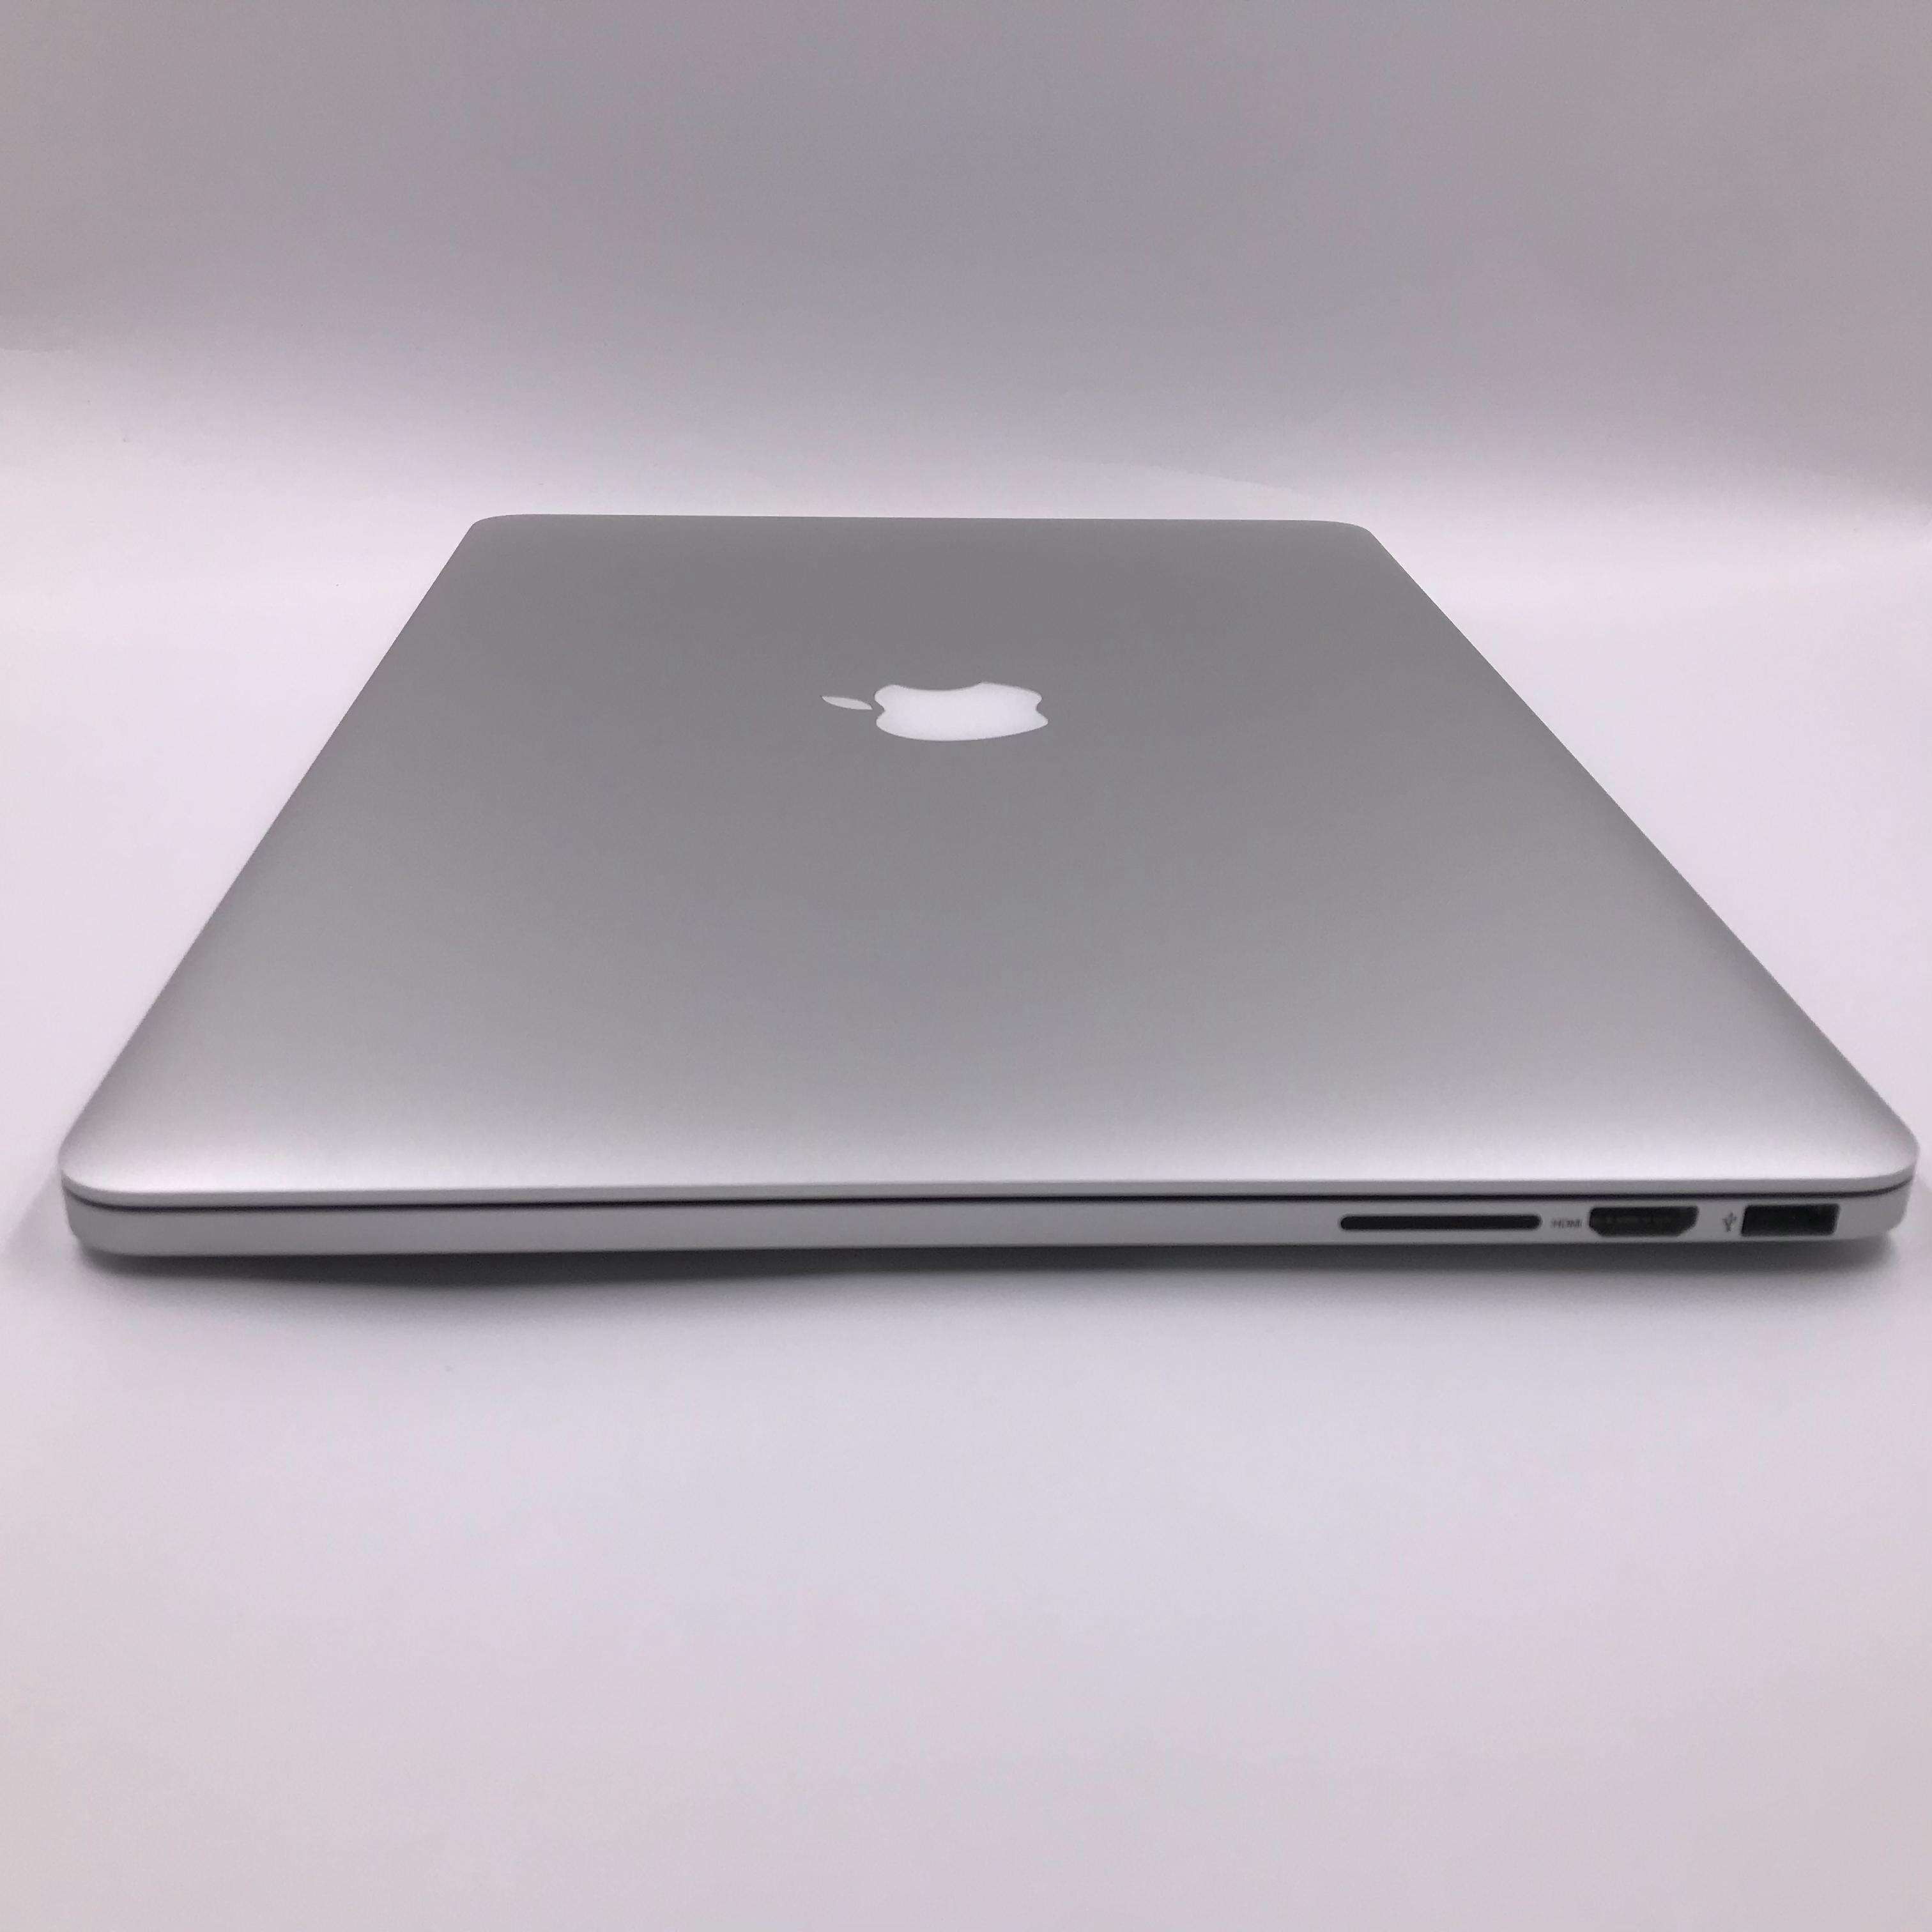 MacBook Pro (15",2015) 硬盘_256G/CPU_2.2 GHz Intel Core i7/显卡_Intel GMA HD 5200 国行